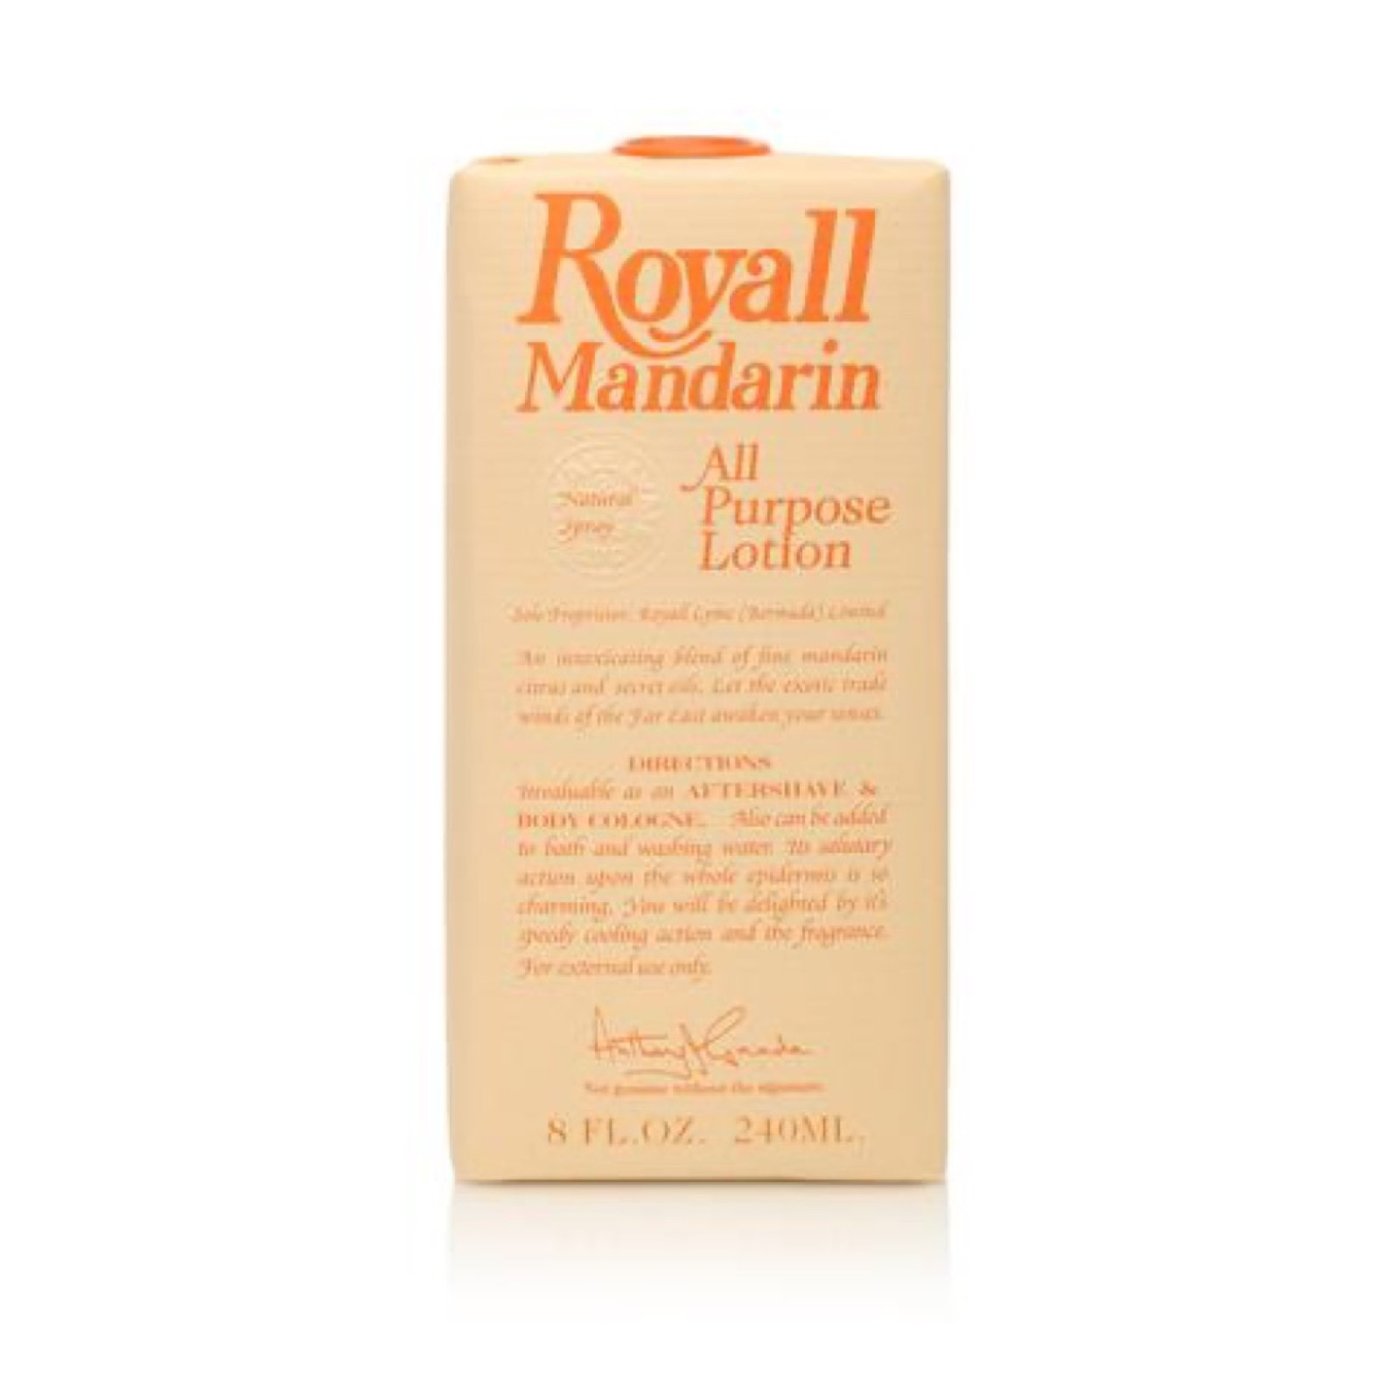 Royall Mandarin All Purpose Lotion Splash package